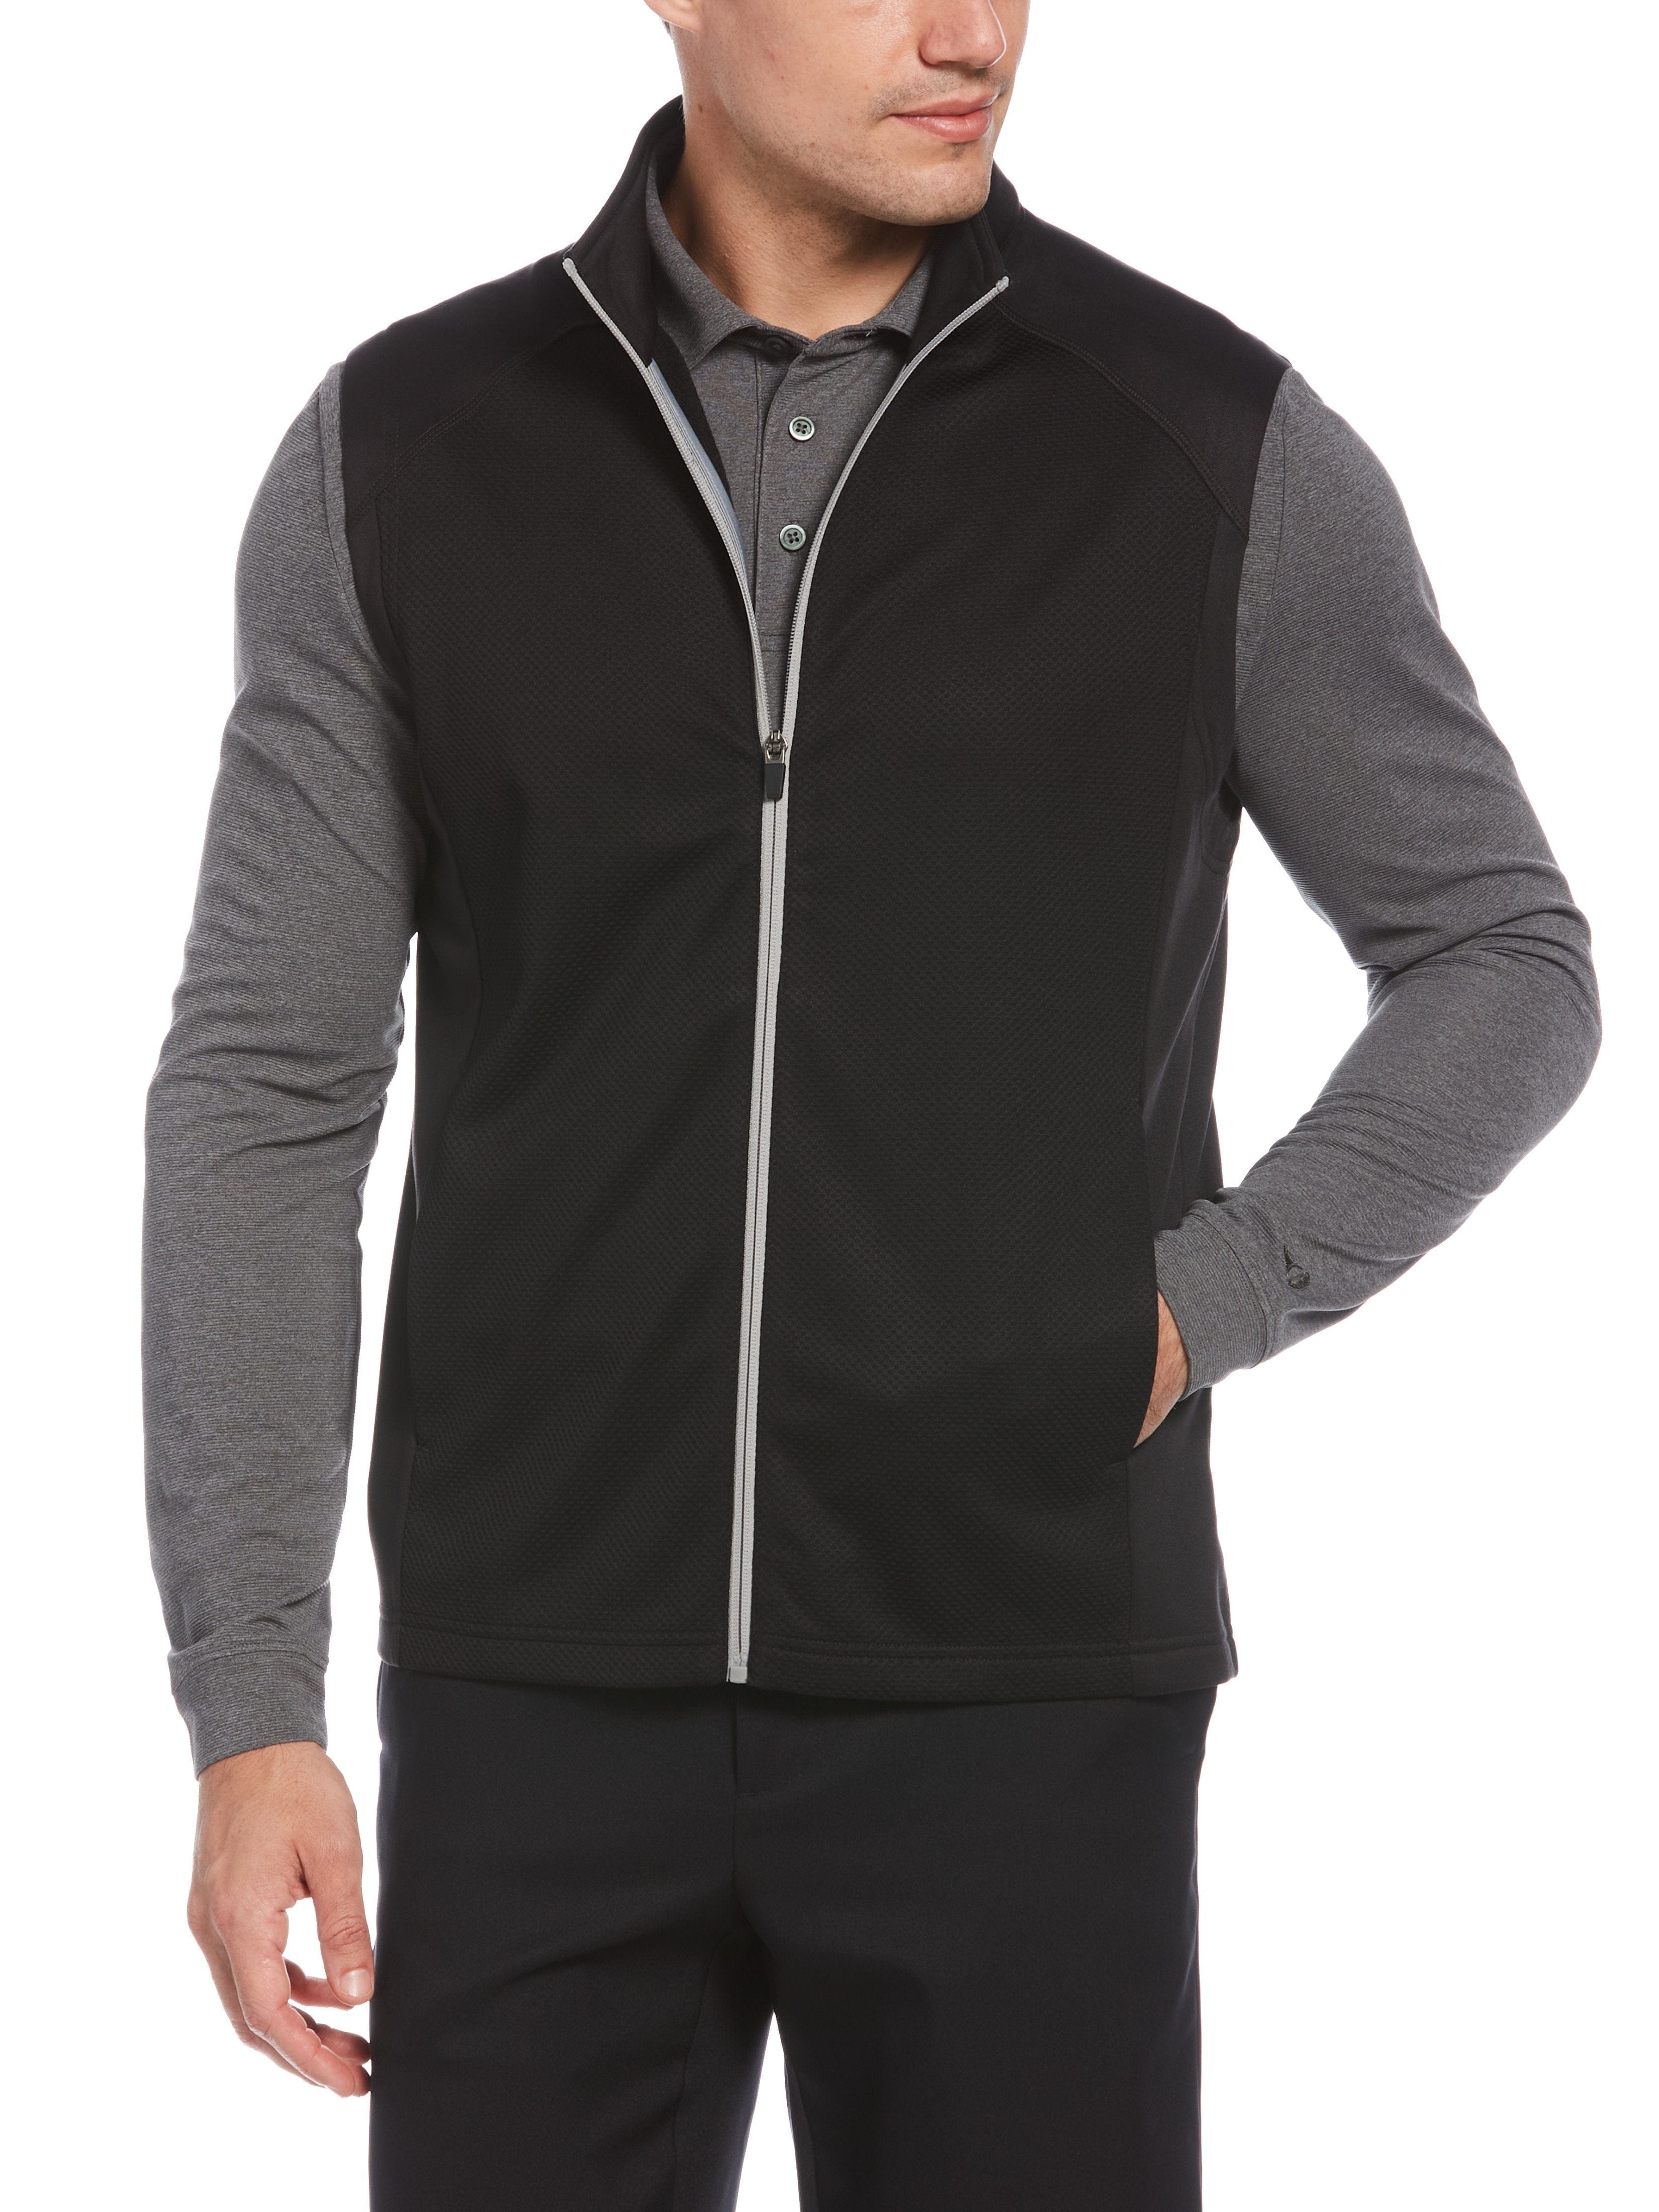 PGA TOUR Apparel Mens Mixed Texture Fleece Golf Vest Top, Size Small, Black, 100% Polyester | Golf Apparel Shop